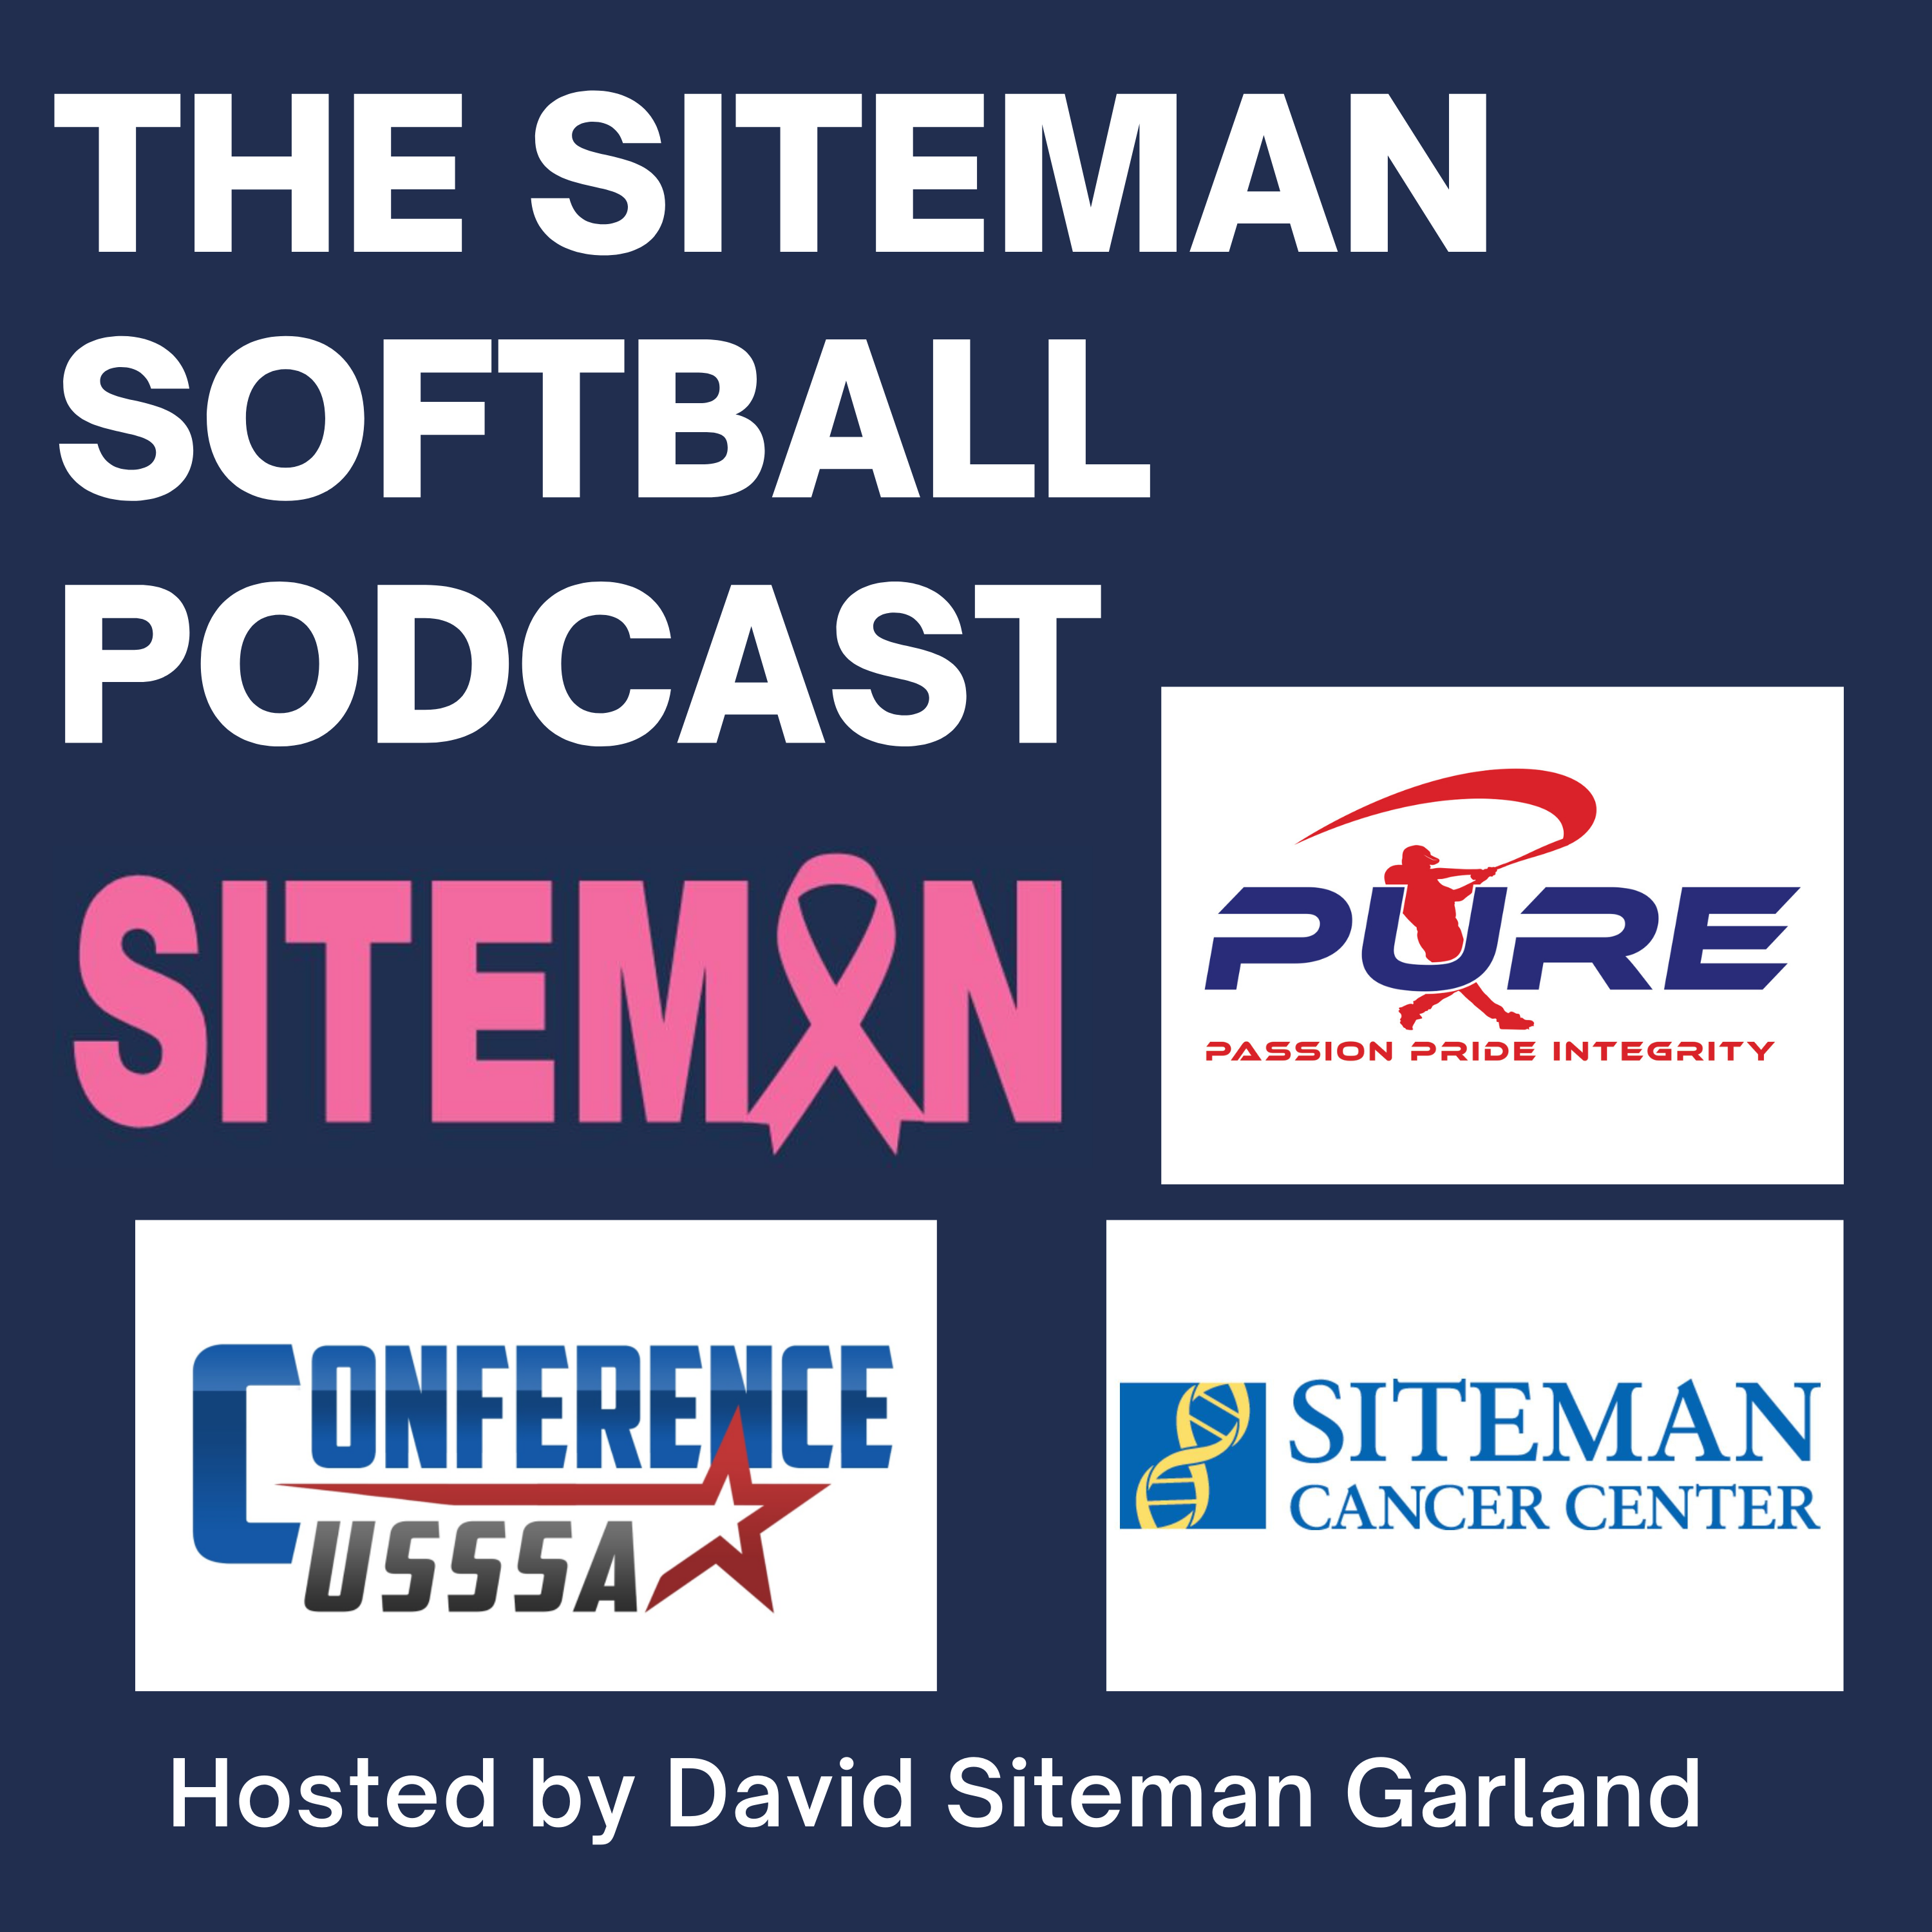 Artwork for podcast The Siteman Softball Podcast